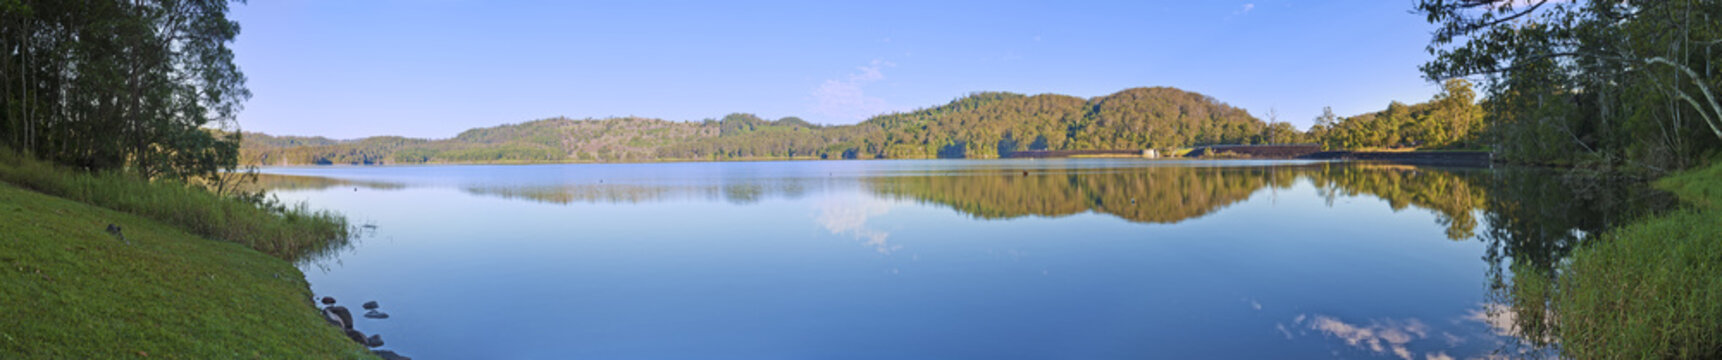 Lake Baroon Panorama Image